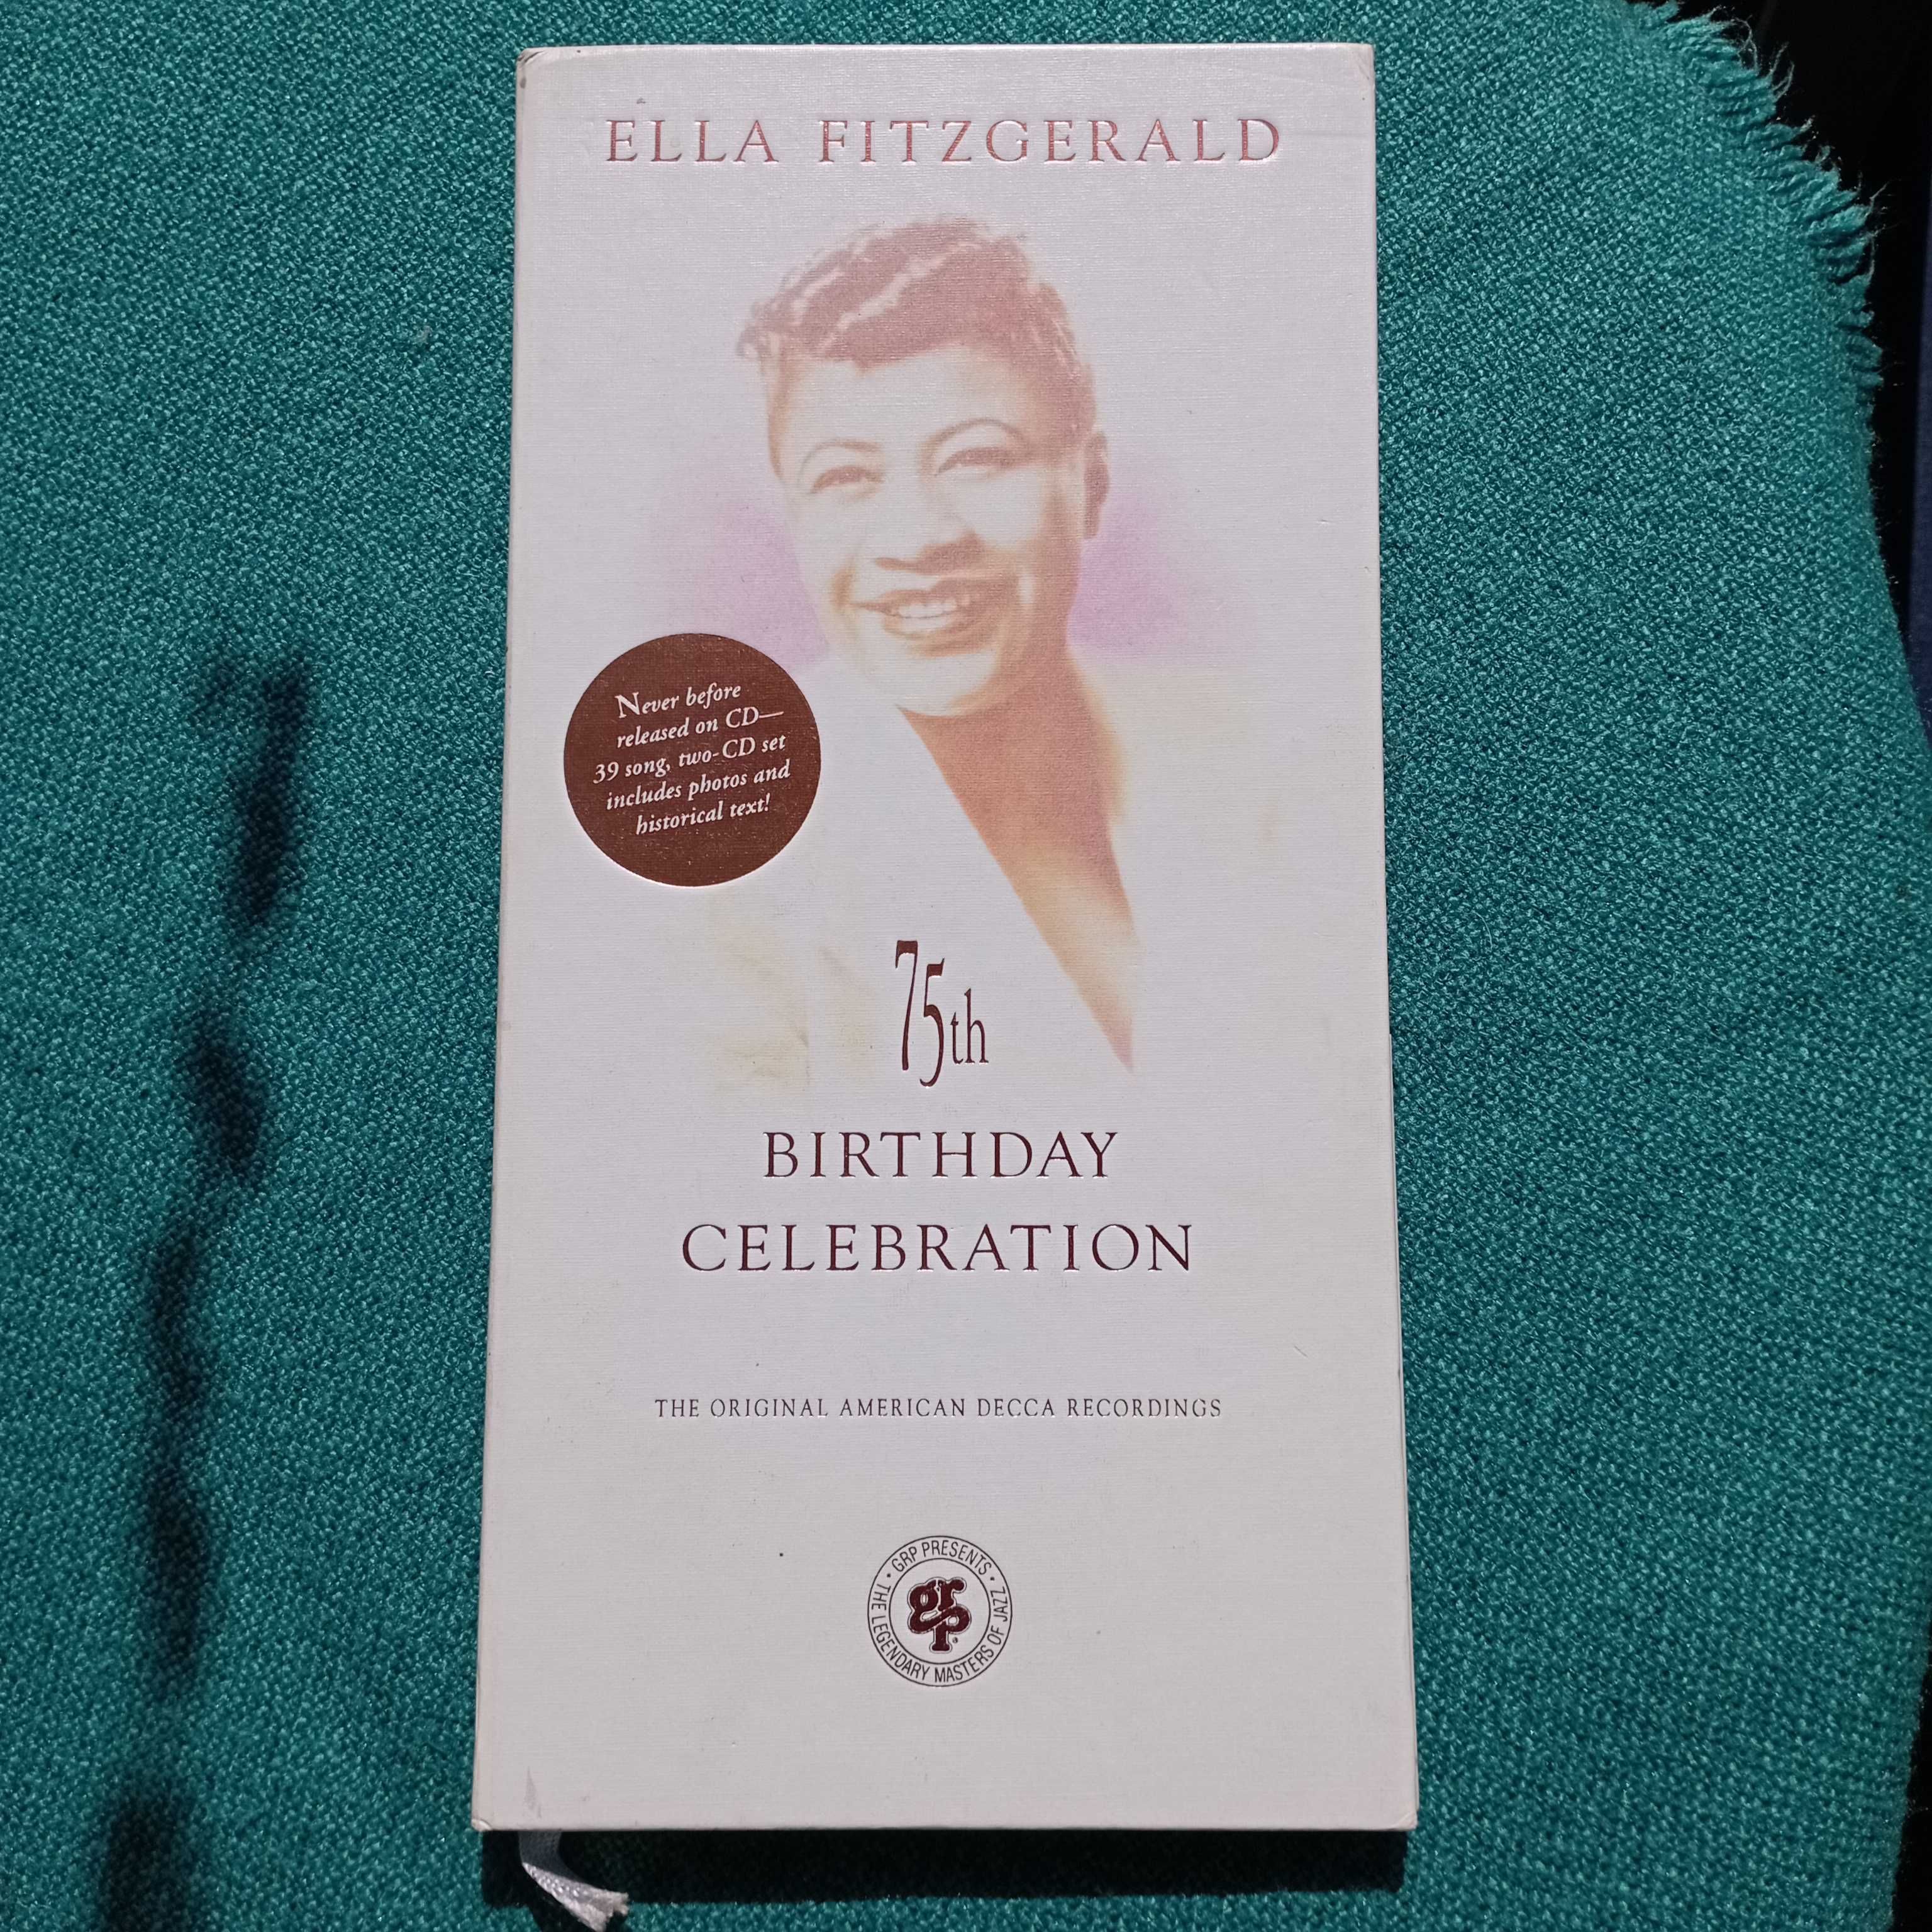 Album CD Ella Fitzgerald 75th birthday celebration